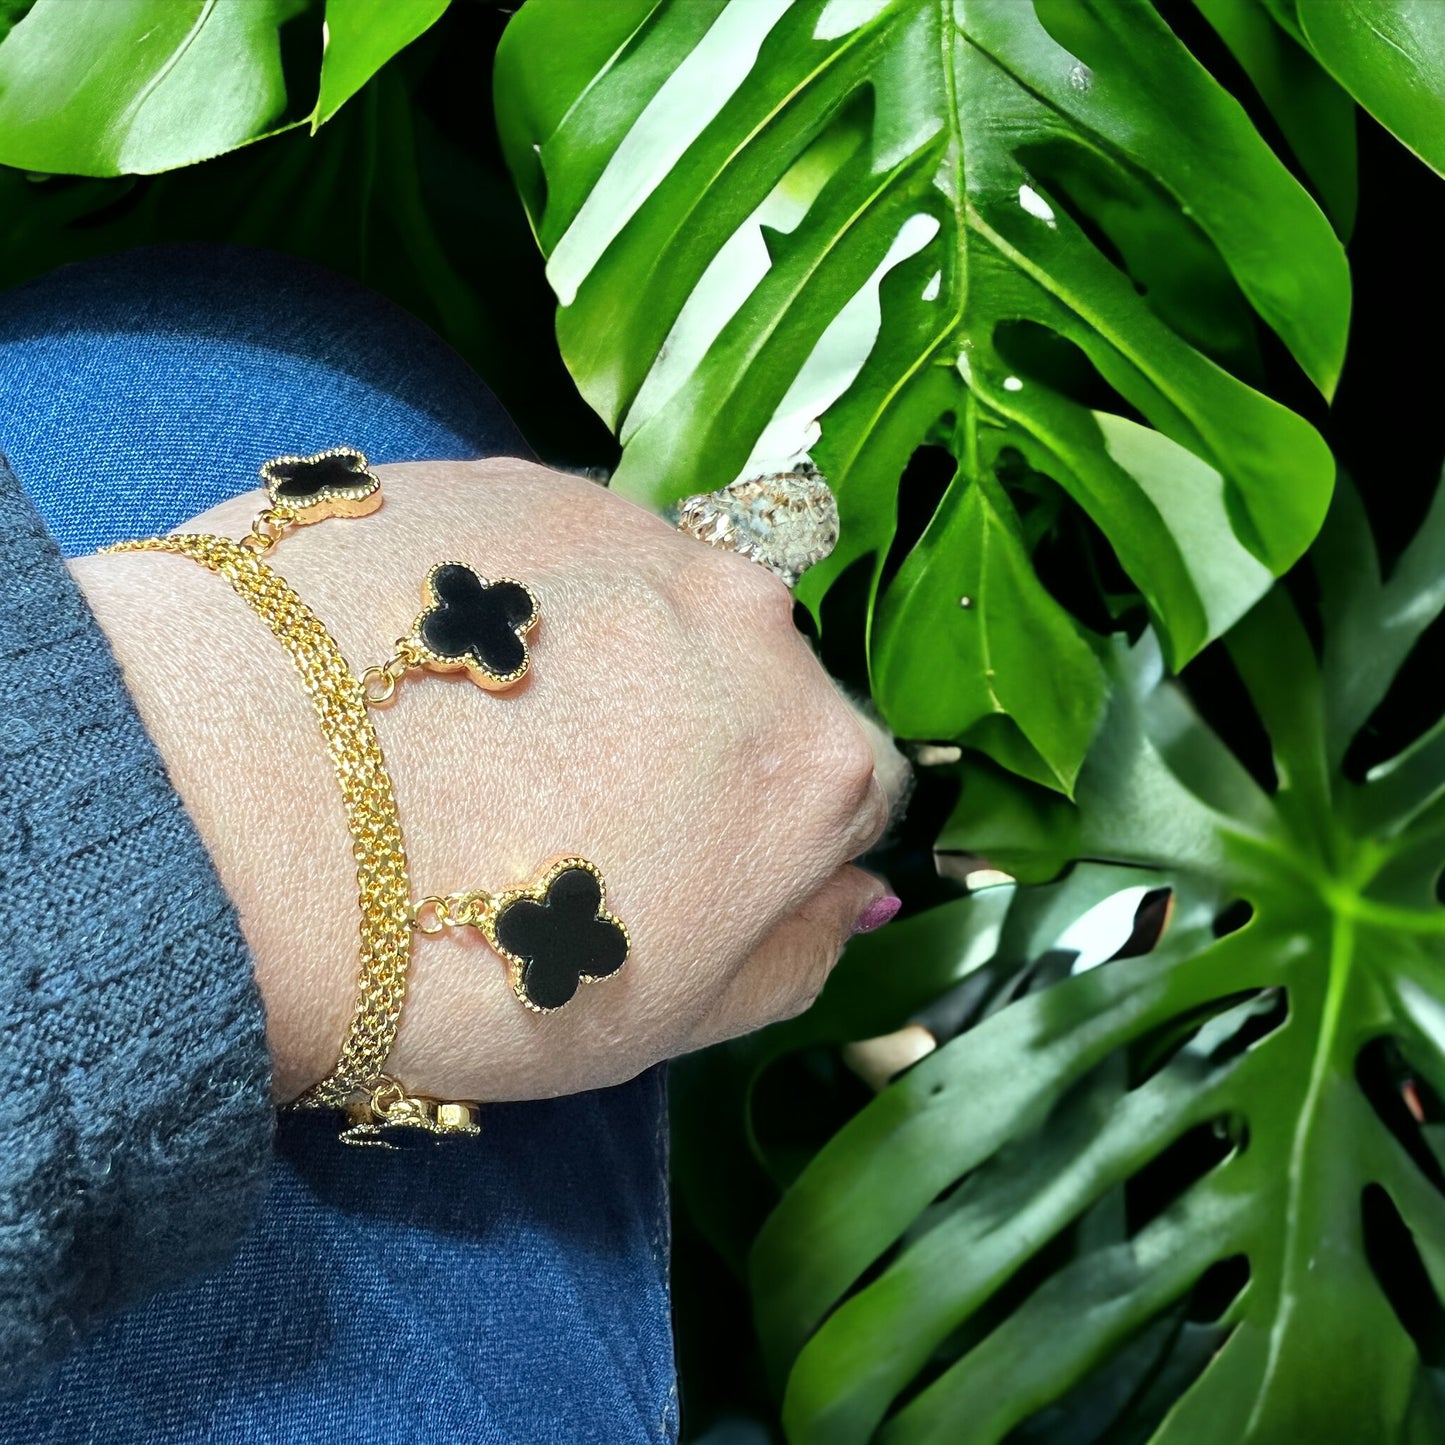 Good Luck: 22k Gold-Plated Clover Charms Bracelet – Elegance Meets Charisma